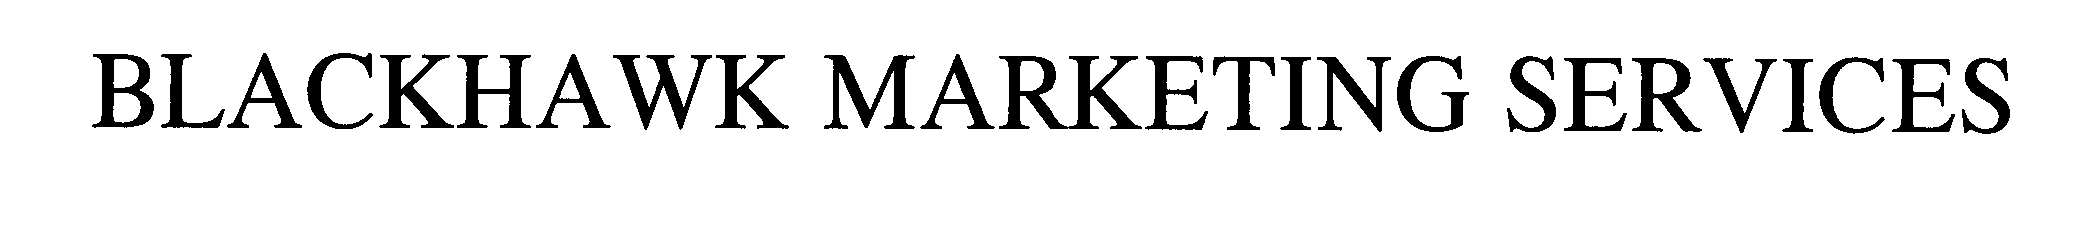  BLACKHAWK MARKETING SERVICES